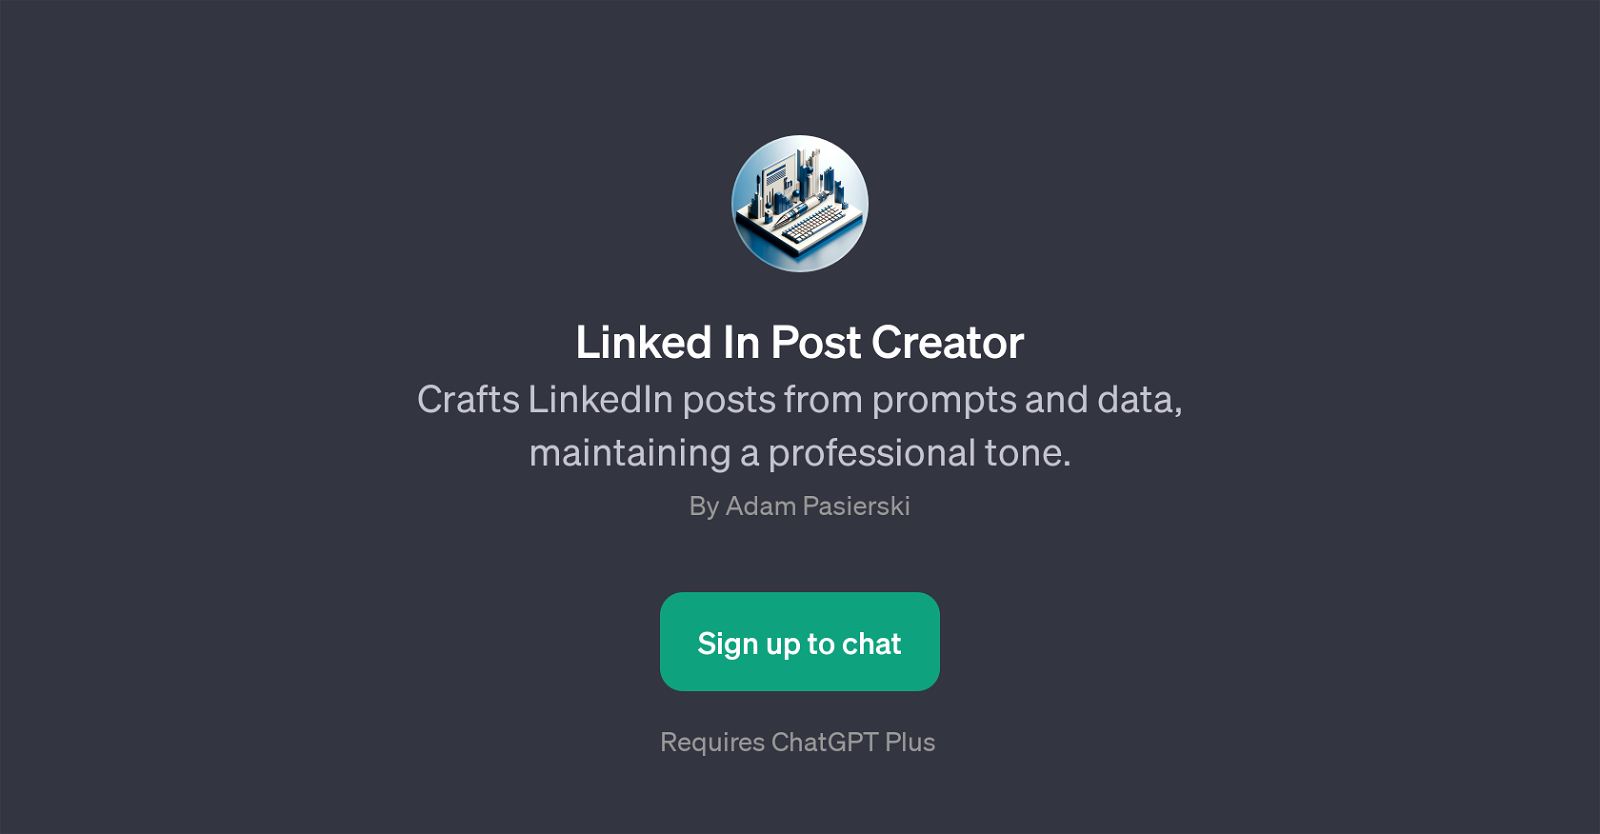 Linked In Post Creator website